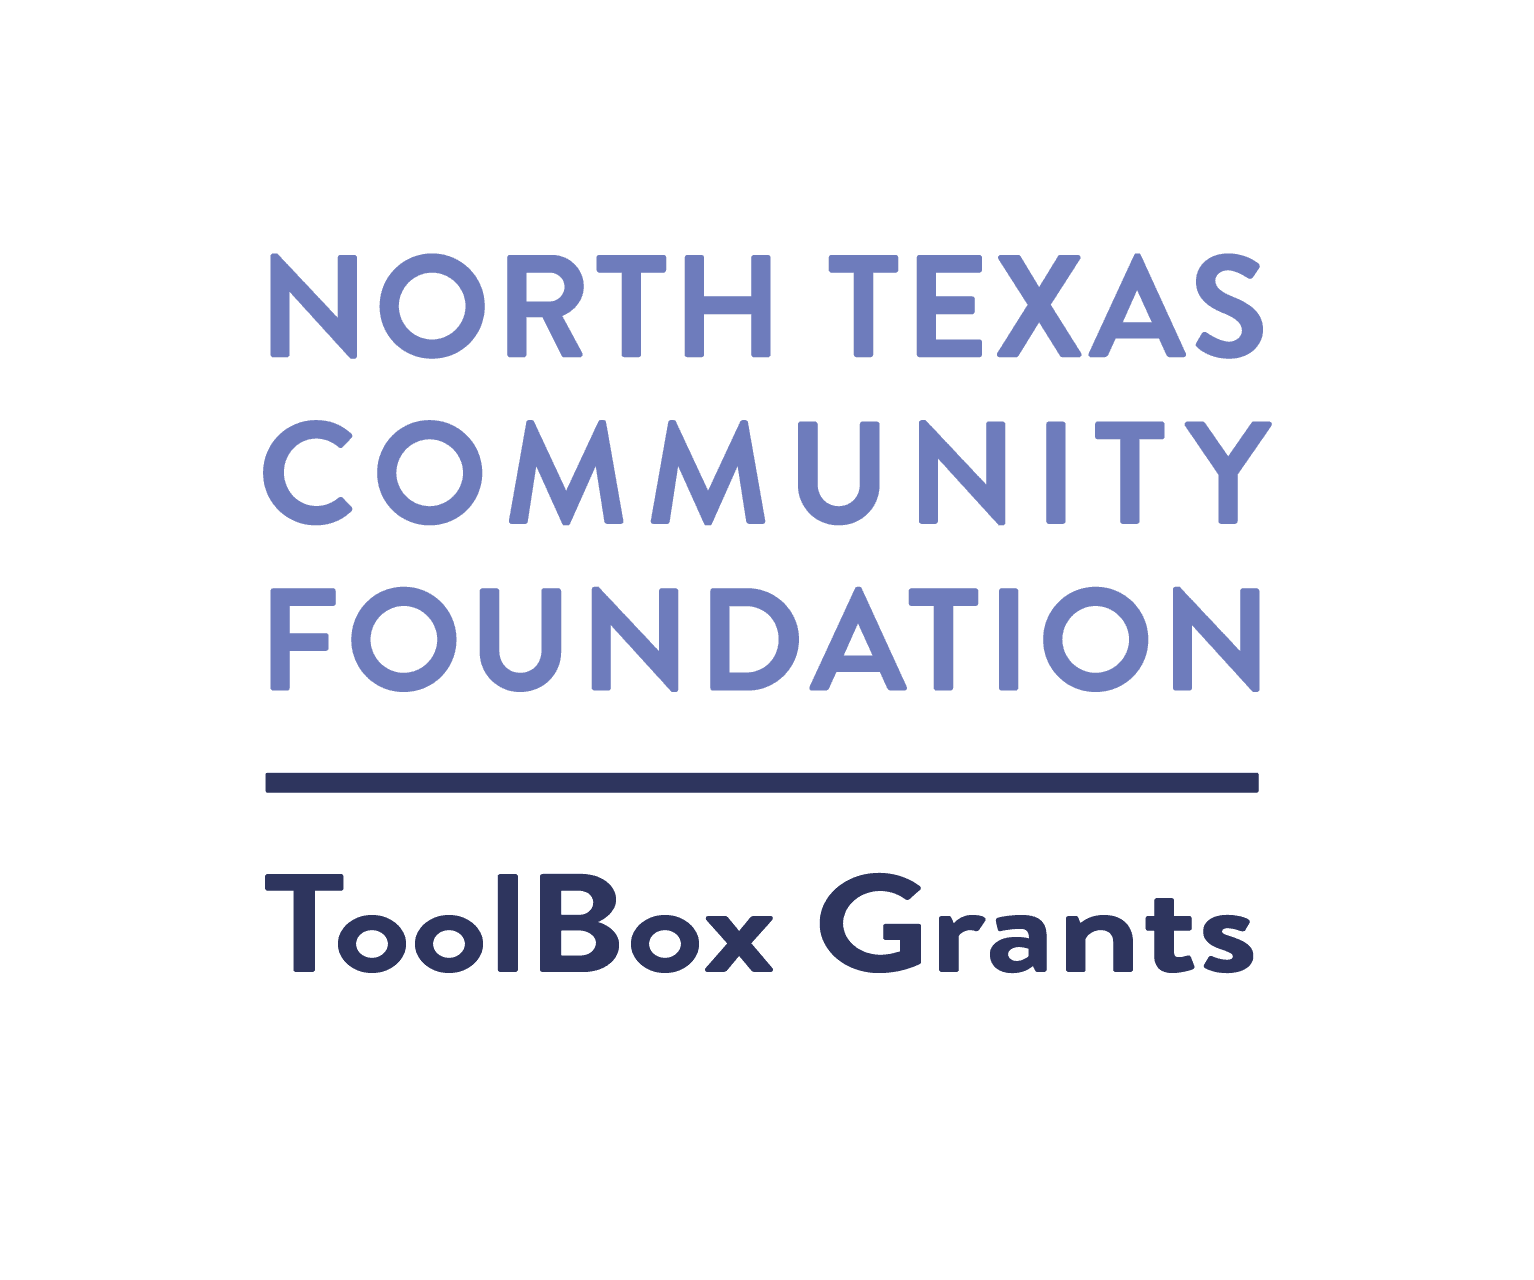 ToolBox Grants at North Texas Community Foundation